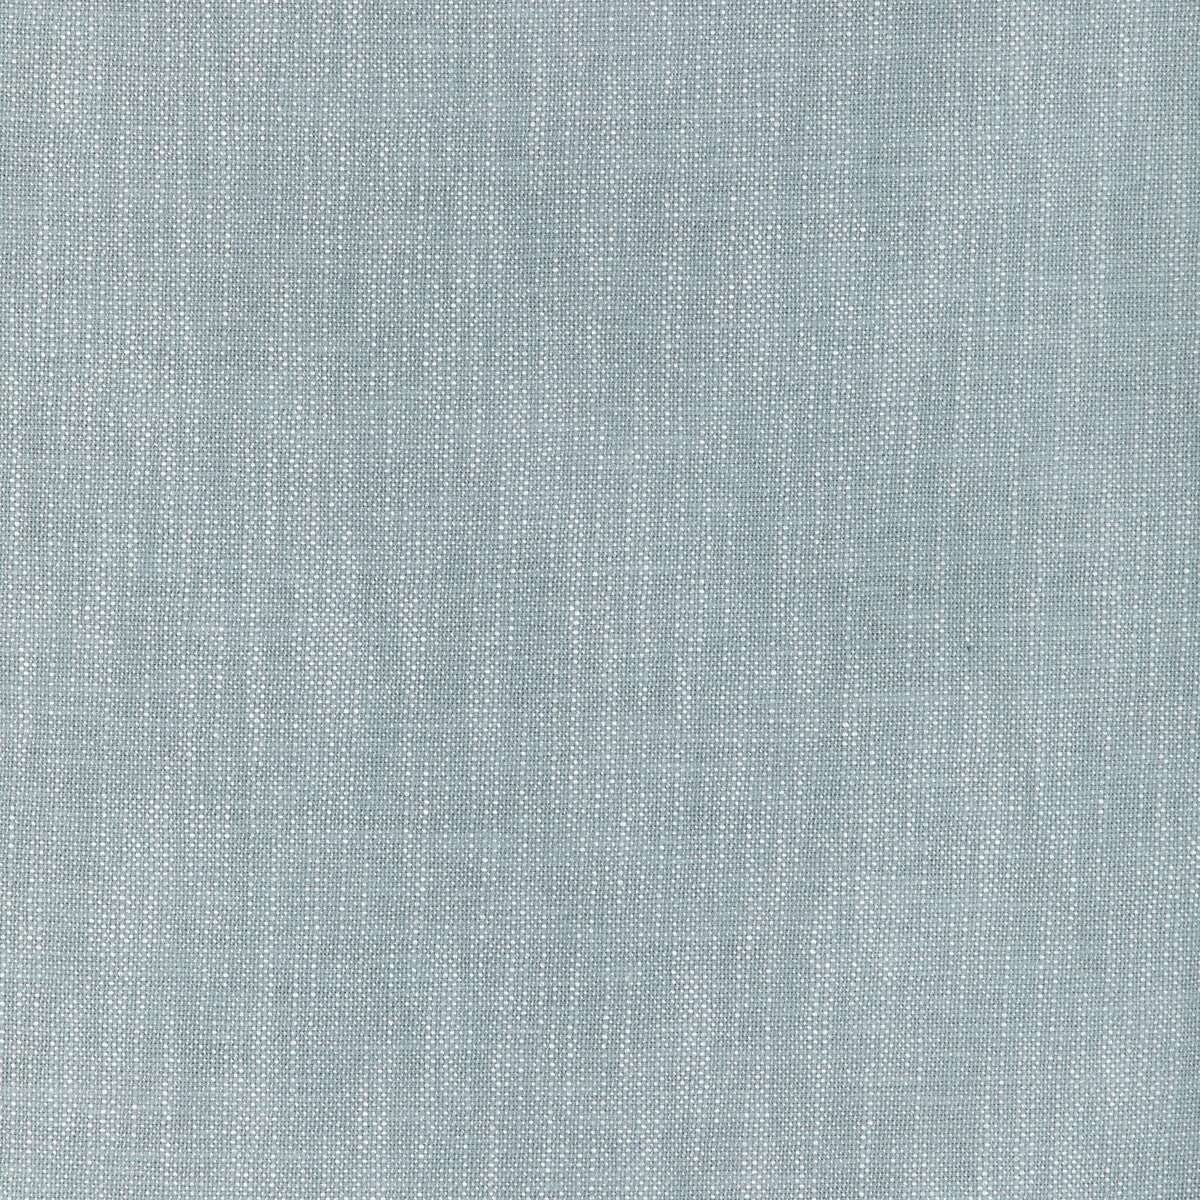 Kravet Smart fabric in 36672-135 color - pattern 36672.135.0 - by Kravet Smart in the Performance Kravetarmor collection